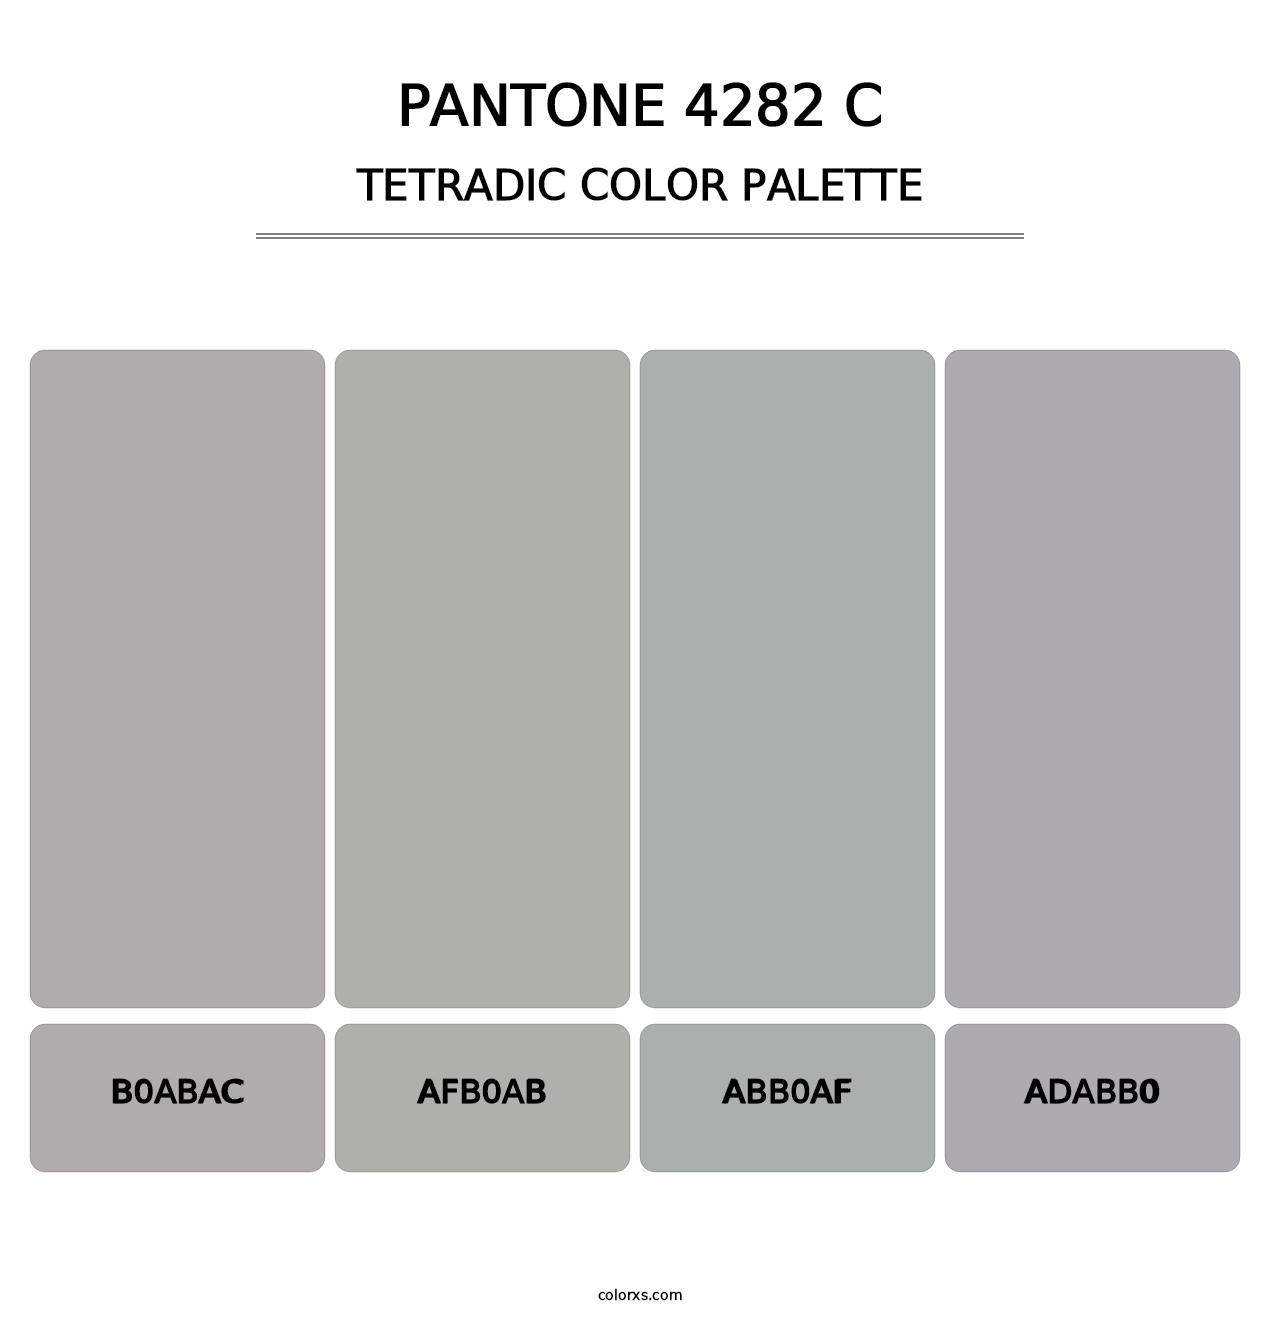 PANTONE 4282 C - Tetradic Color Palette